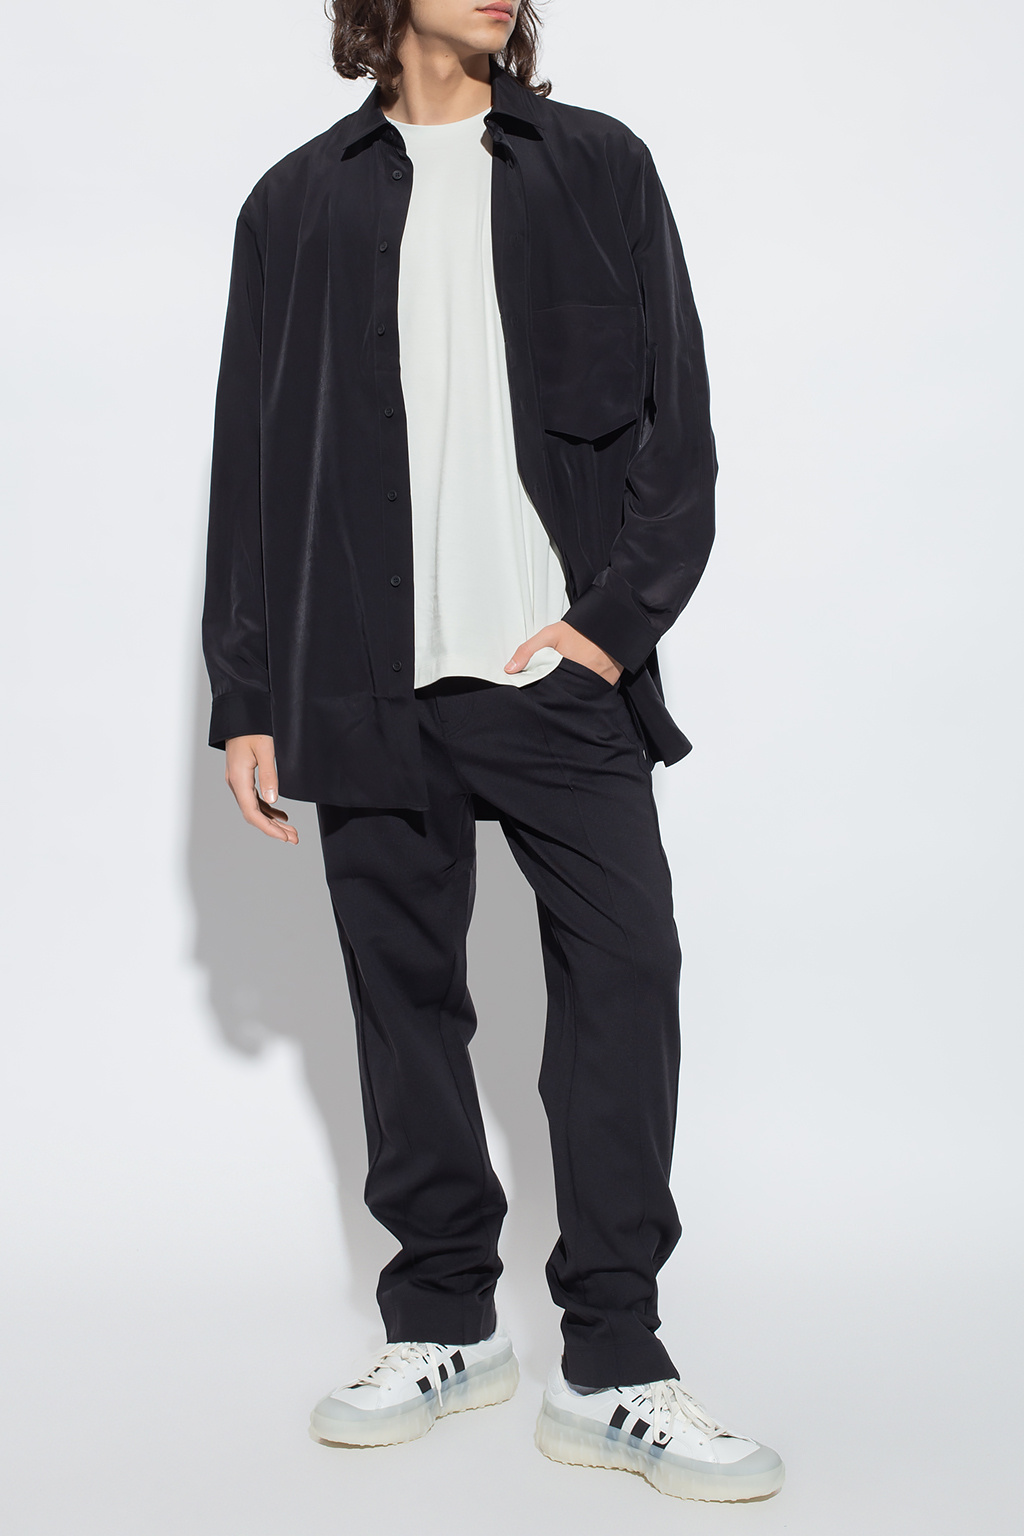 Y-3 Yohji Yamamoto Shirt with pocket | Men's Clothing | Vitkac